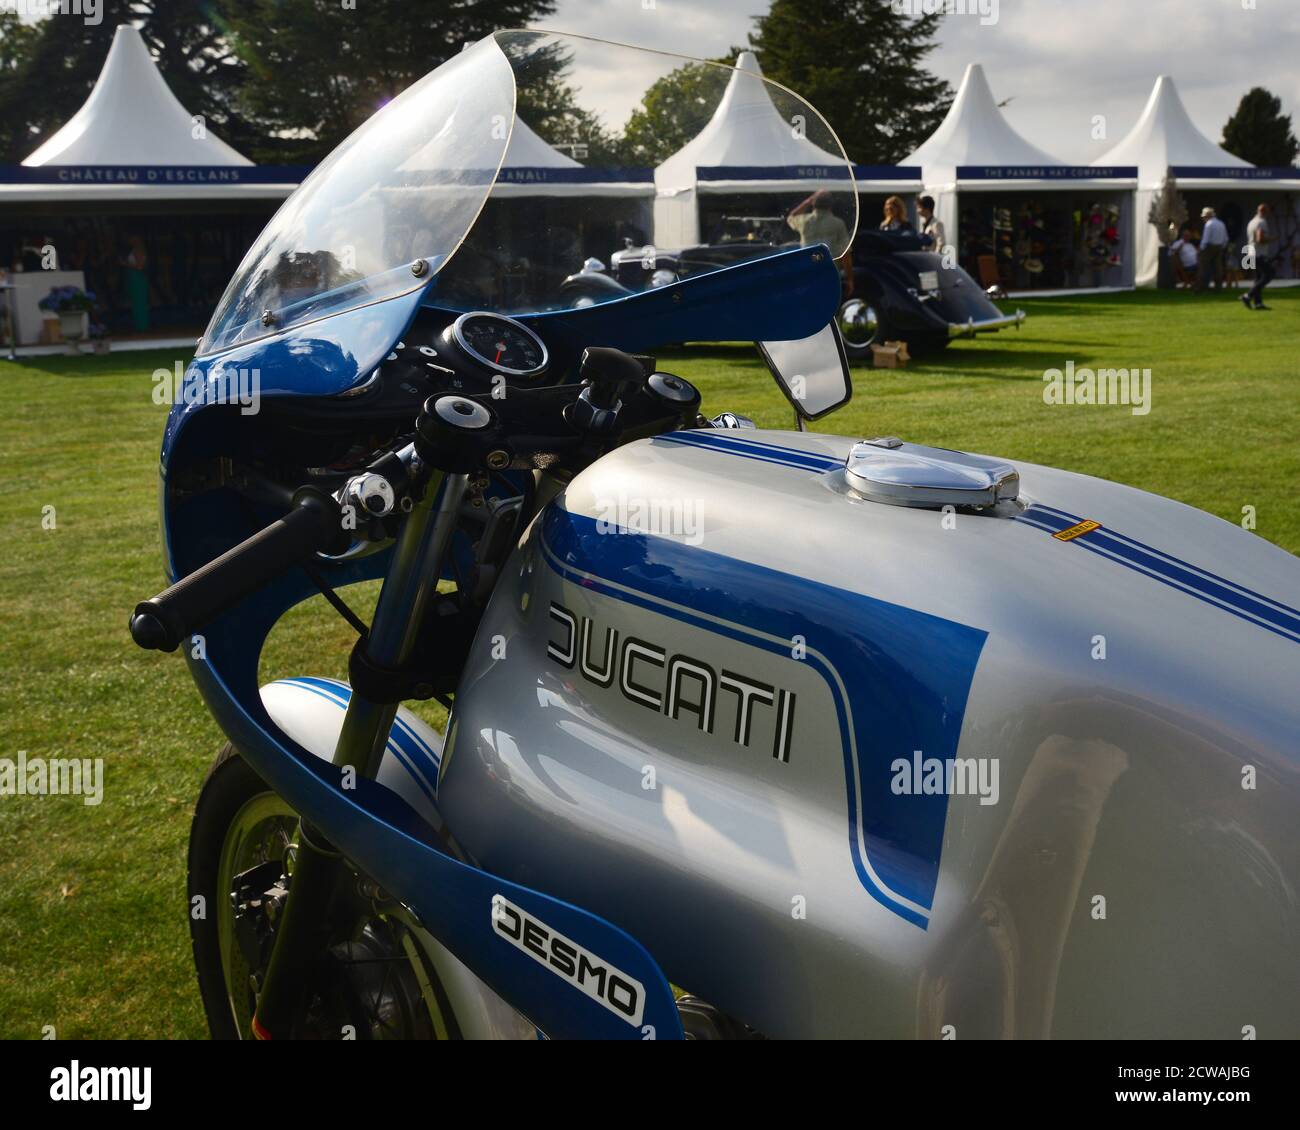 Ducati 900 Super Sport, Salon Privé, Blenheim Palace, Woodstock, Oxfordshire, England, September 2020. Stock Photo